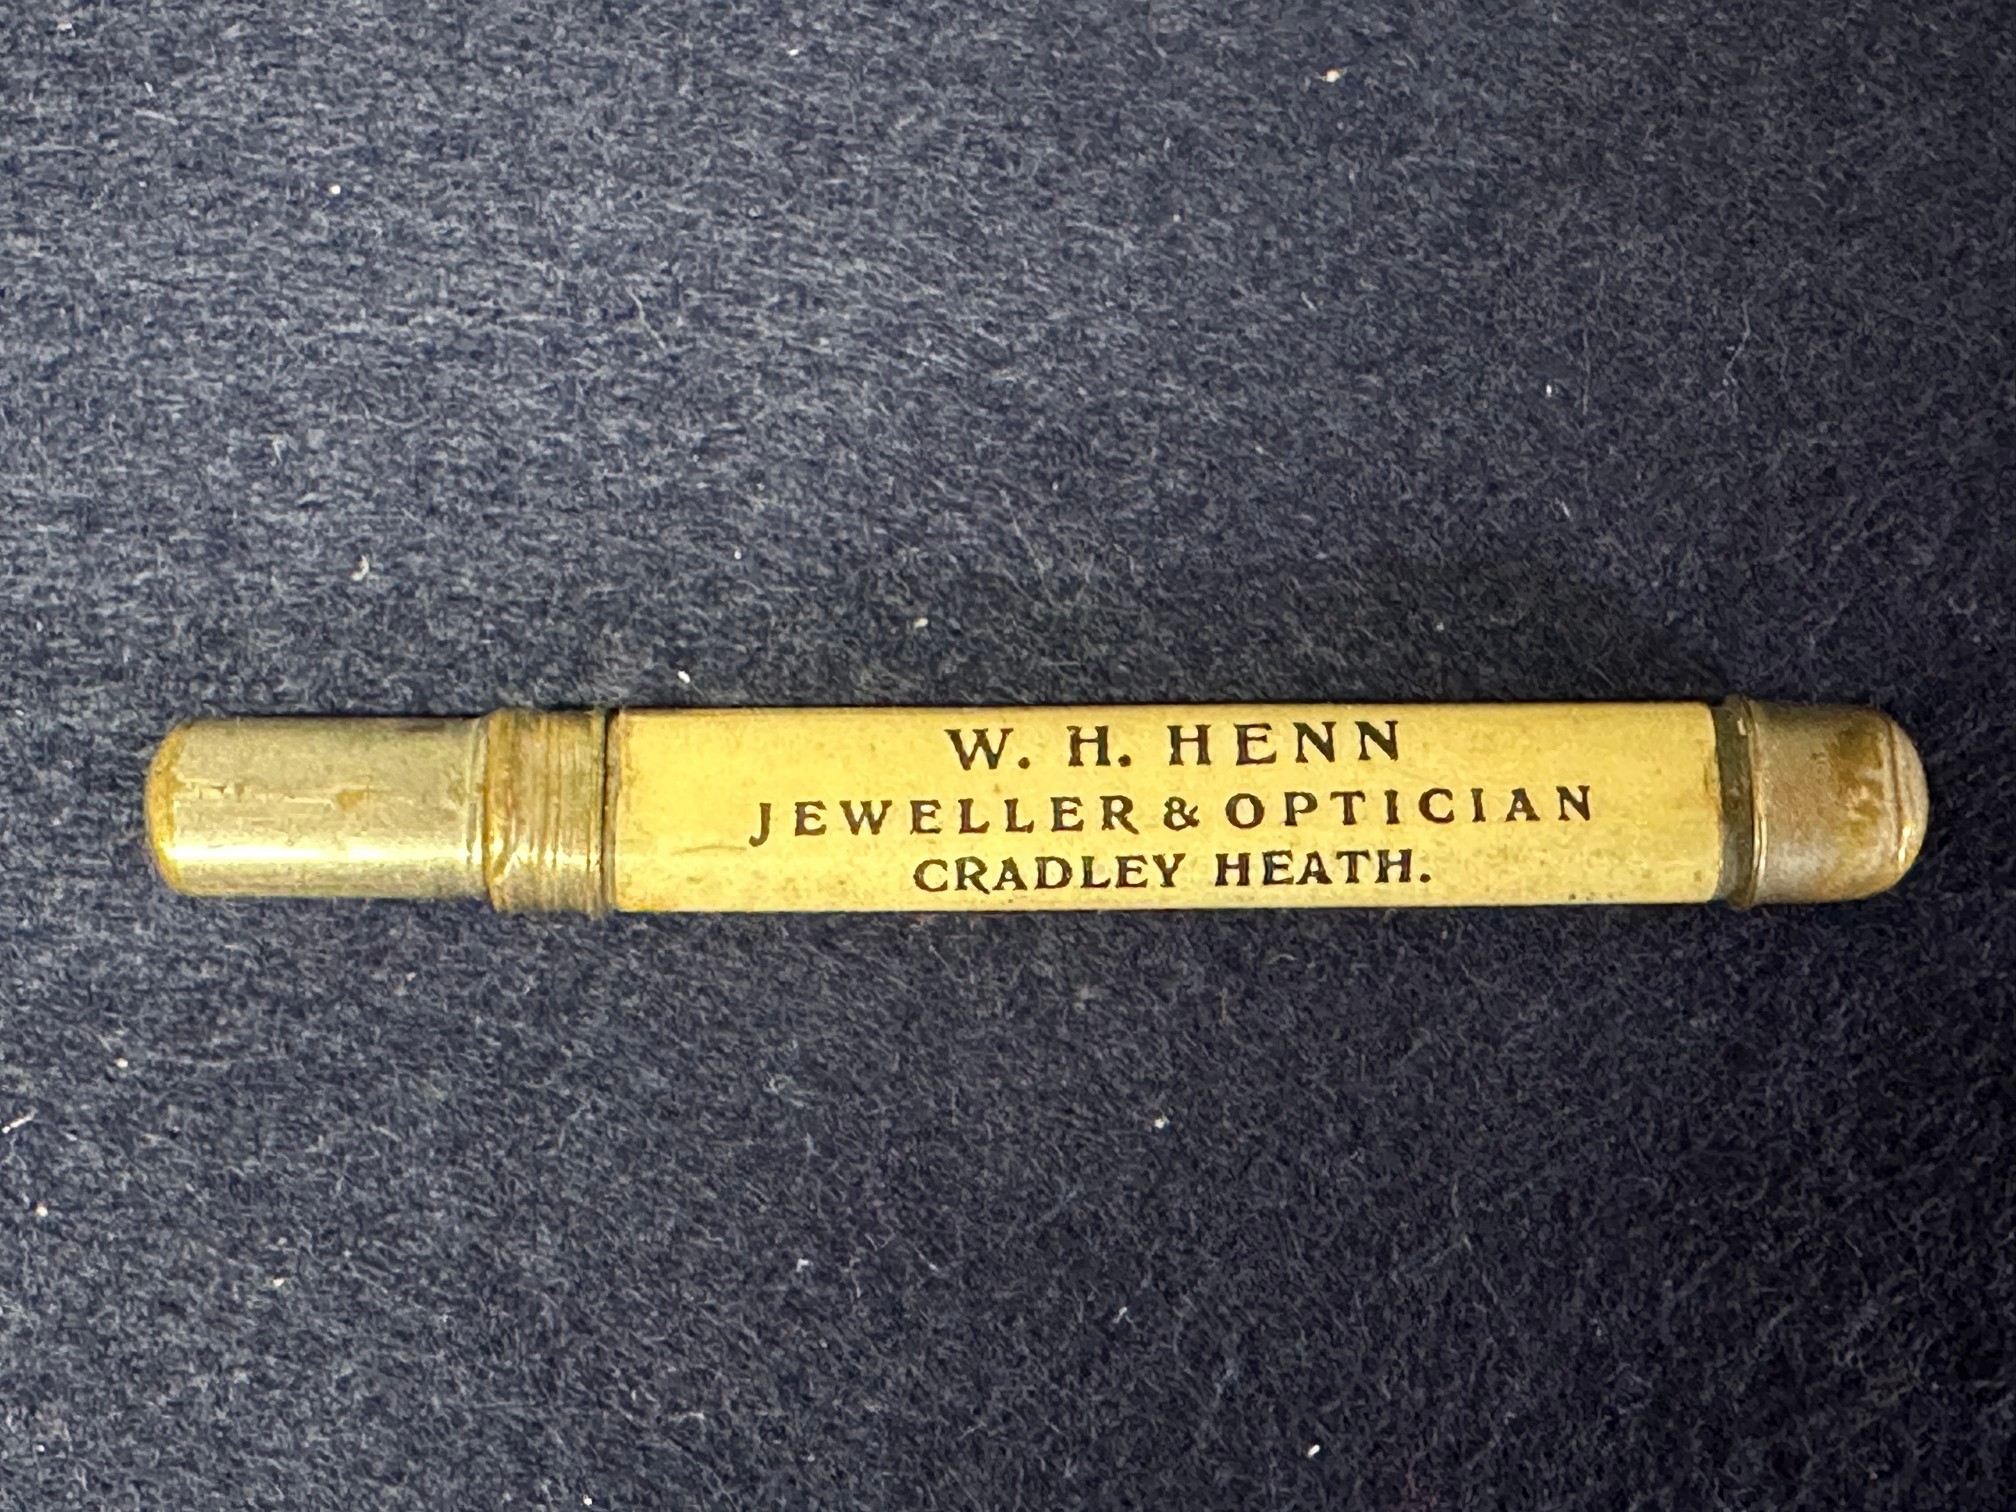 A pencil advertising W.H. Henn Jeweller & Optician, Cradley Heath - Quality & Value in Diamond - Image 2 of 3